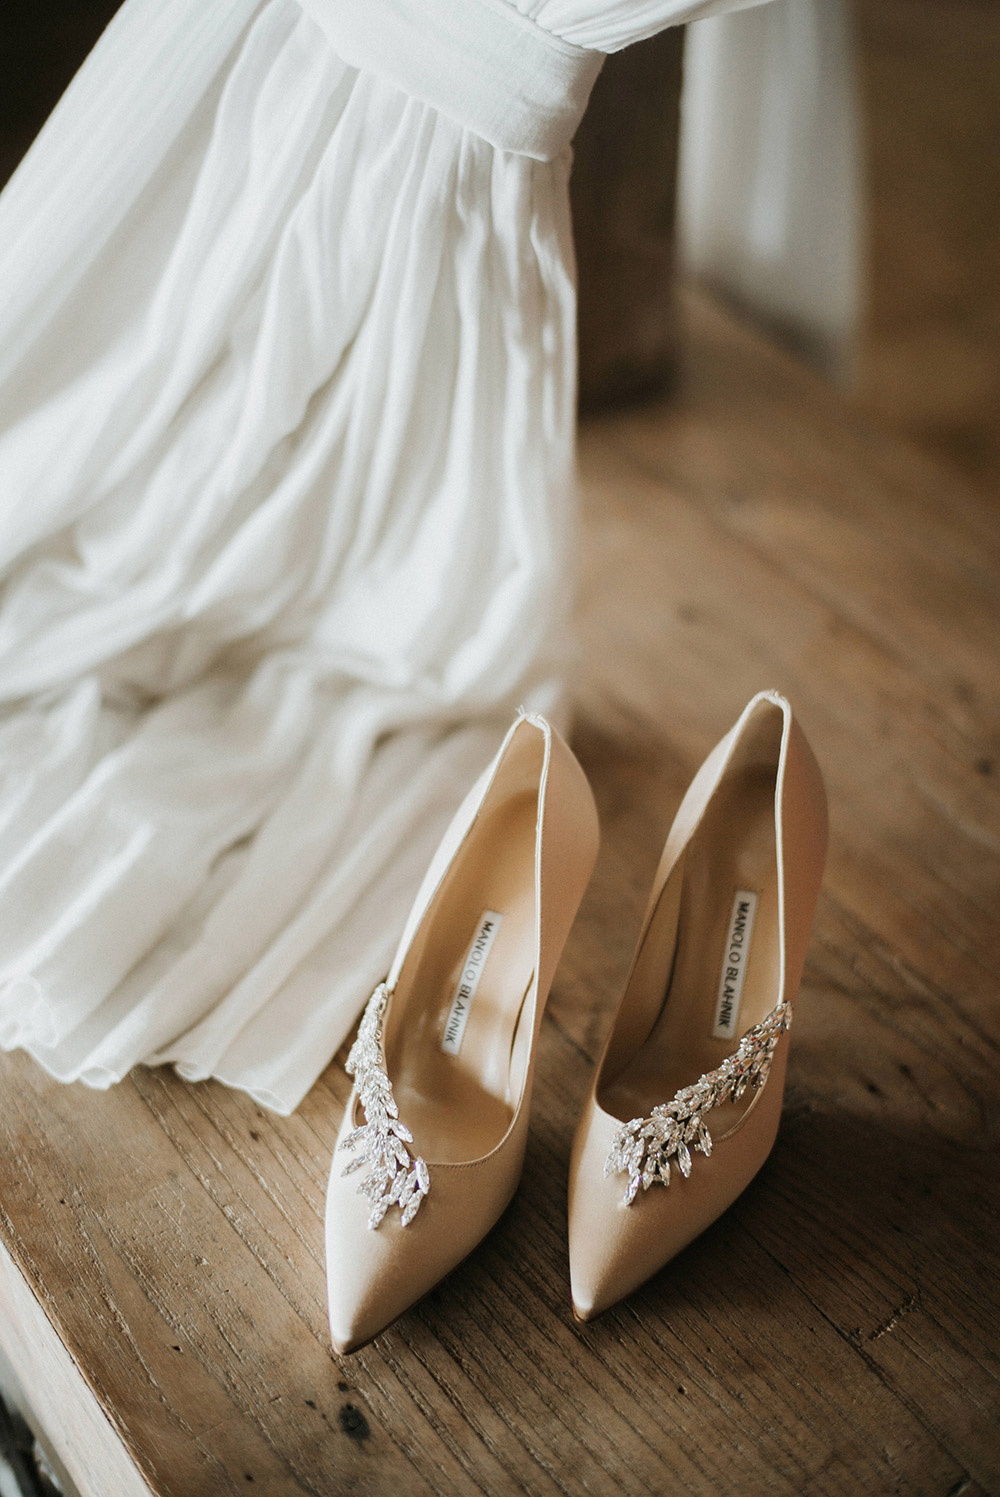 Bridal shoes by Manolo Blahnik. Photo by Iluminen. www.theweddingnotebook.com